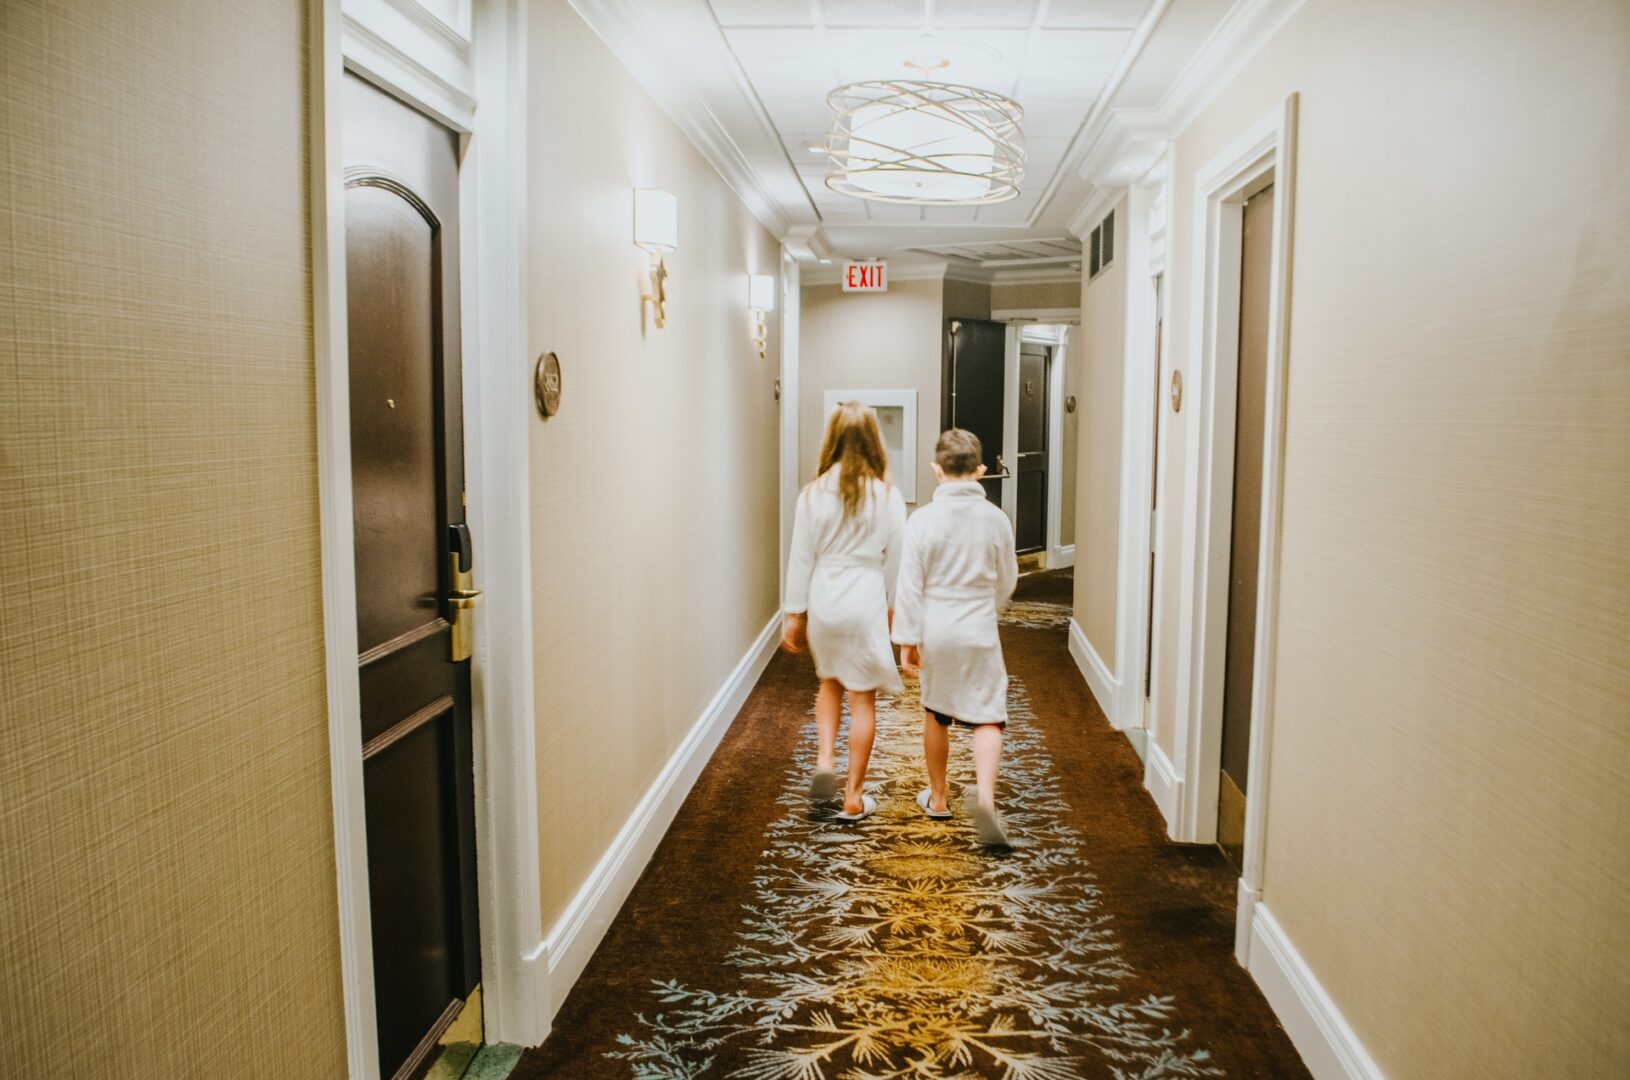 kids-walking-down-hallway-in-robes